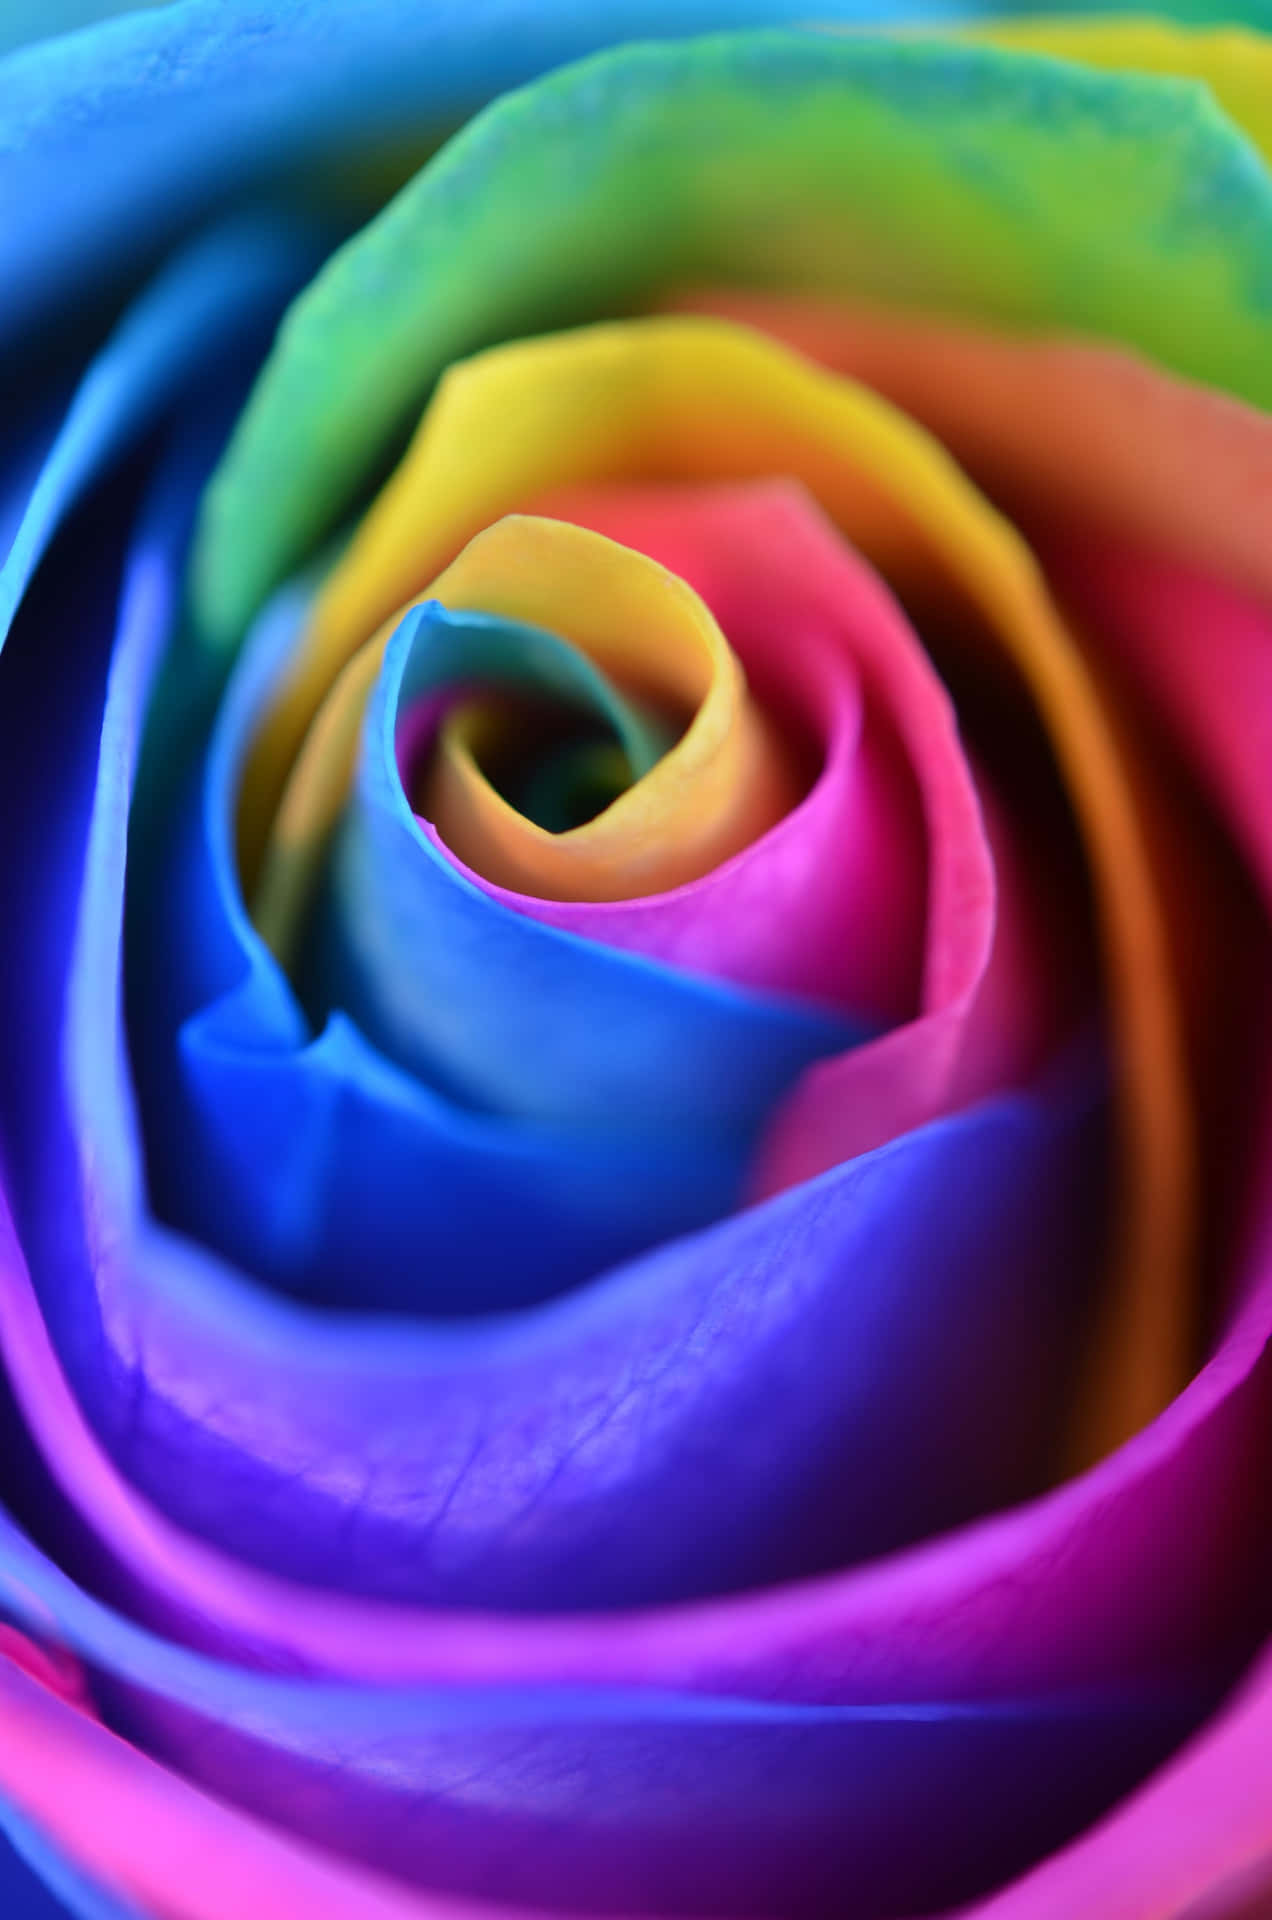 Rainbow Flower Iphone Background